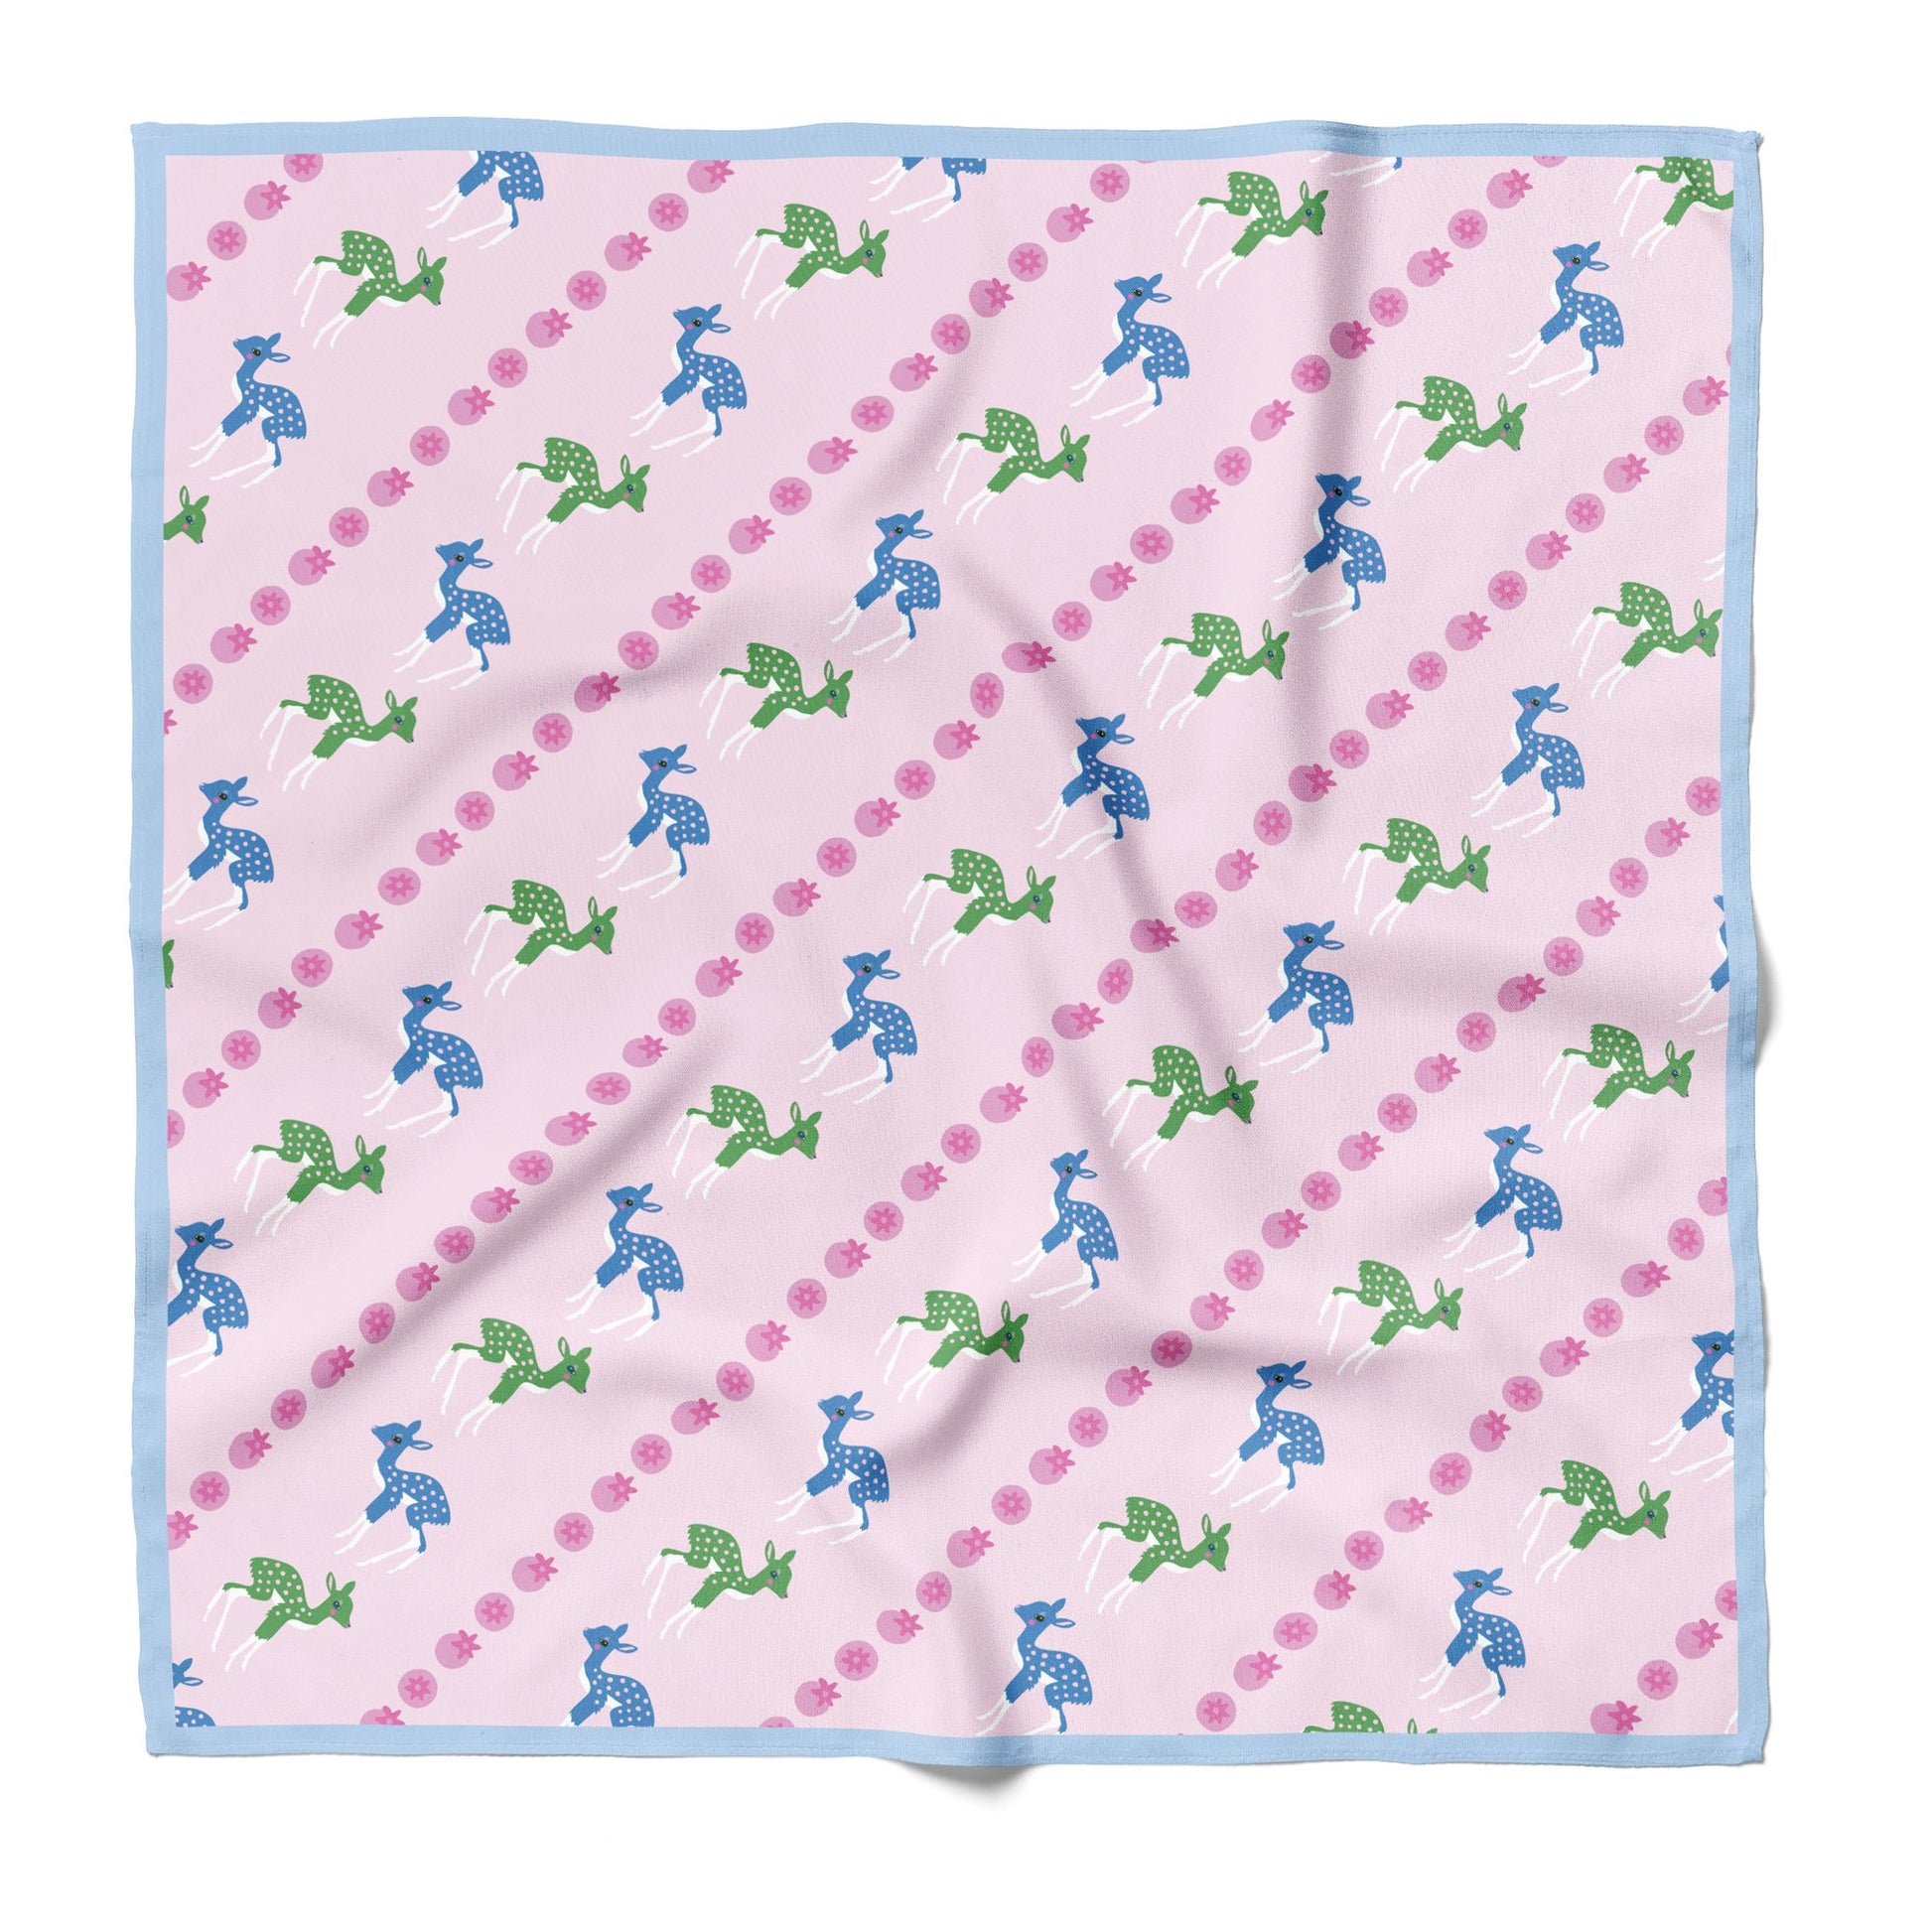 Pink cotton silk blend bandana with blue and green deer.